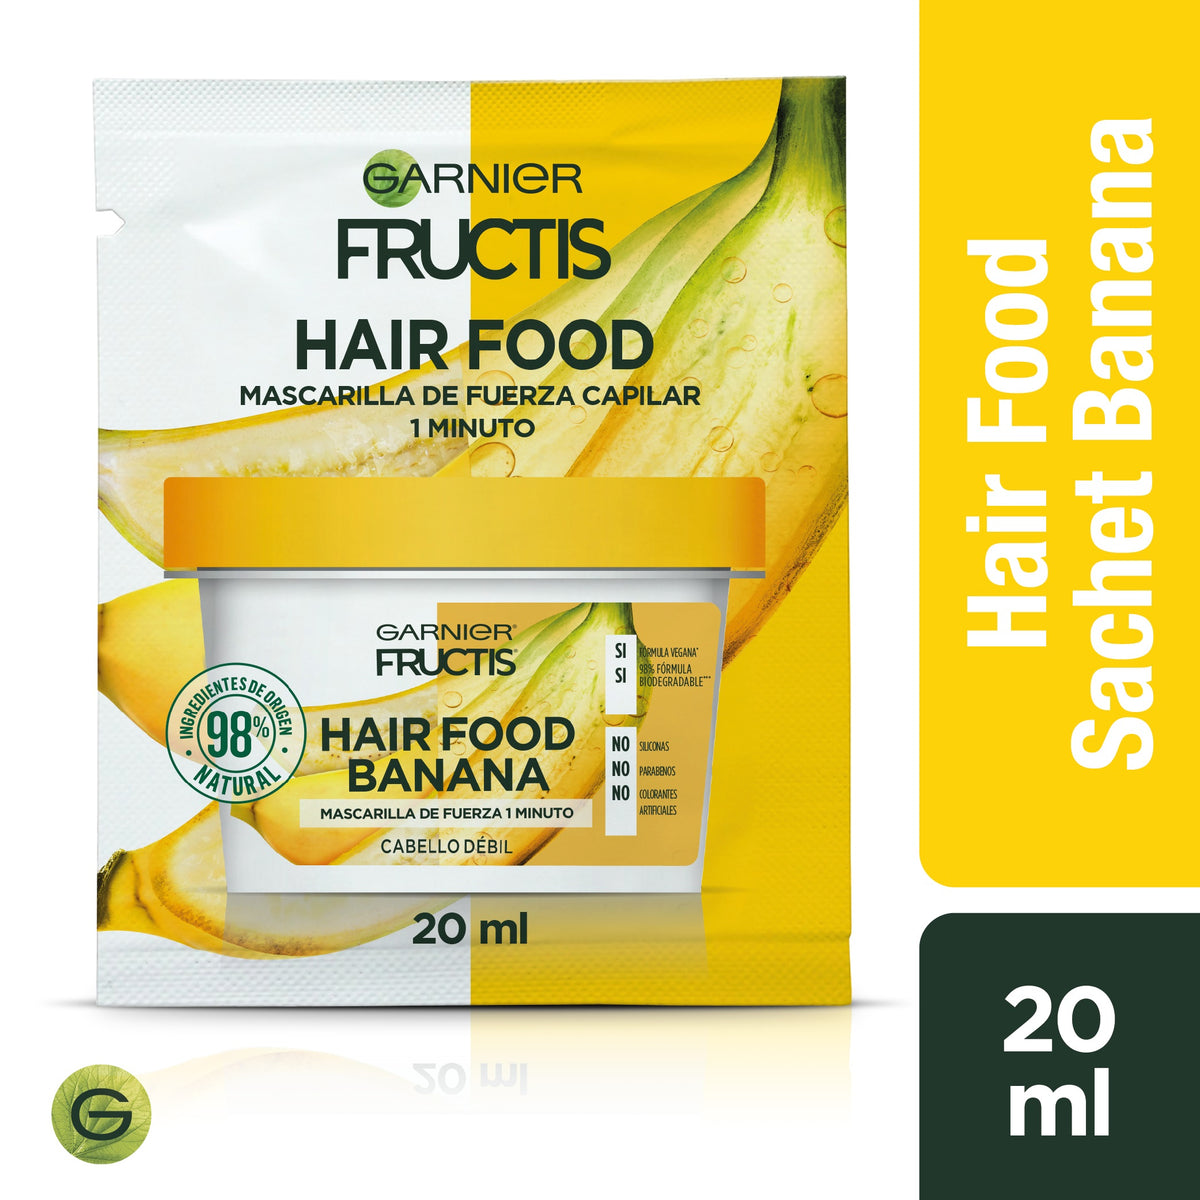 Fructis Hair Food Banana Sch 20 ml